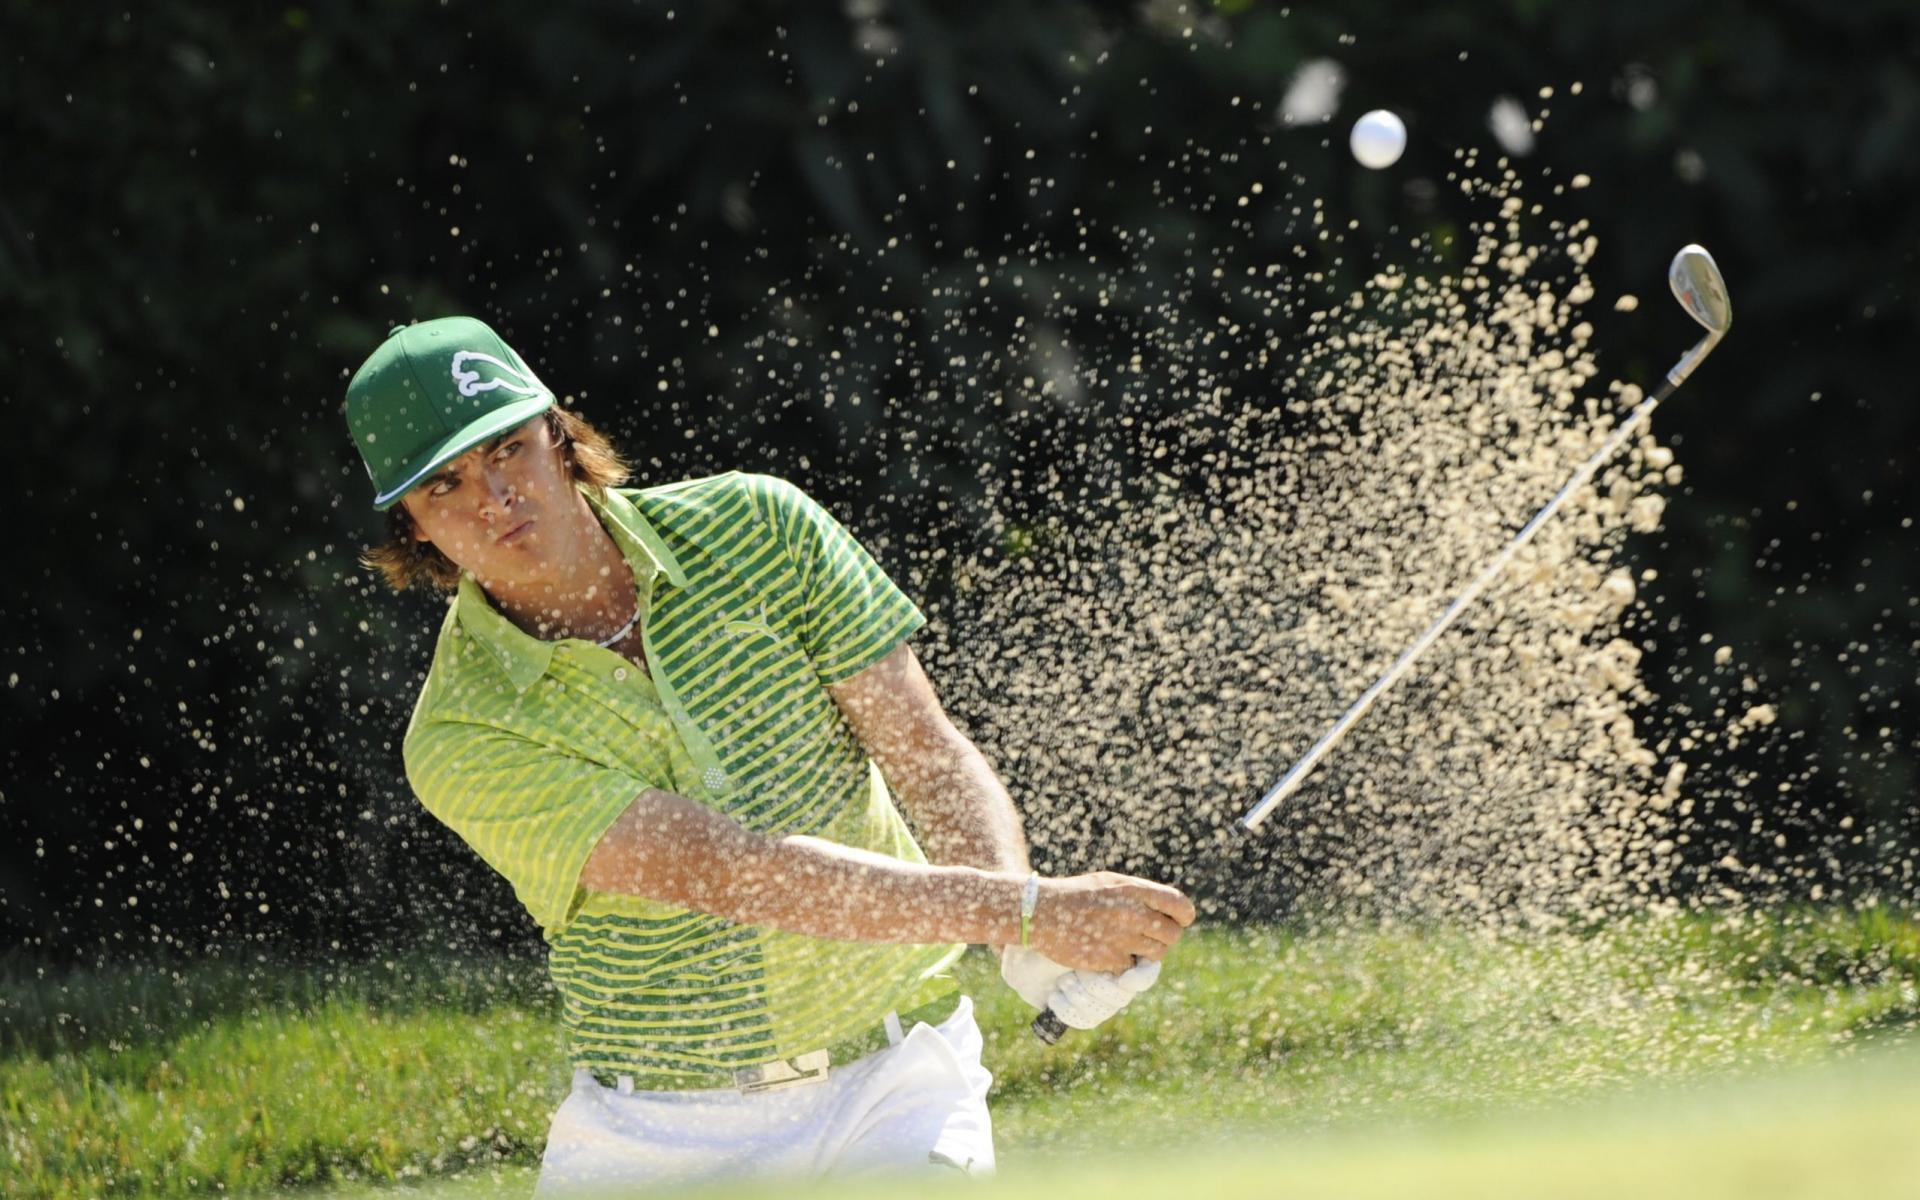 Golfer Swing Free Wallpaper. I HD Image